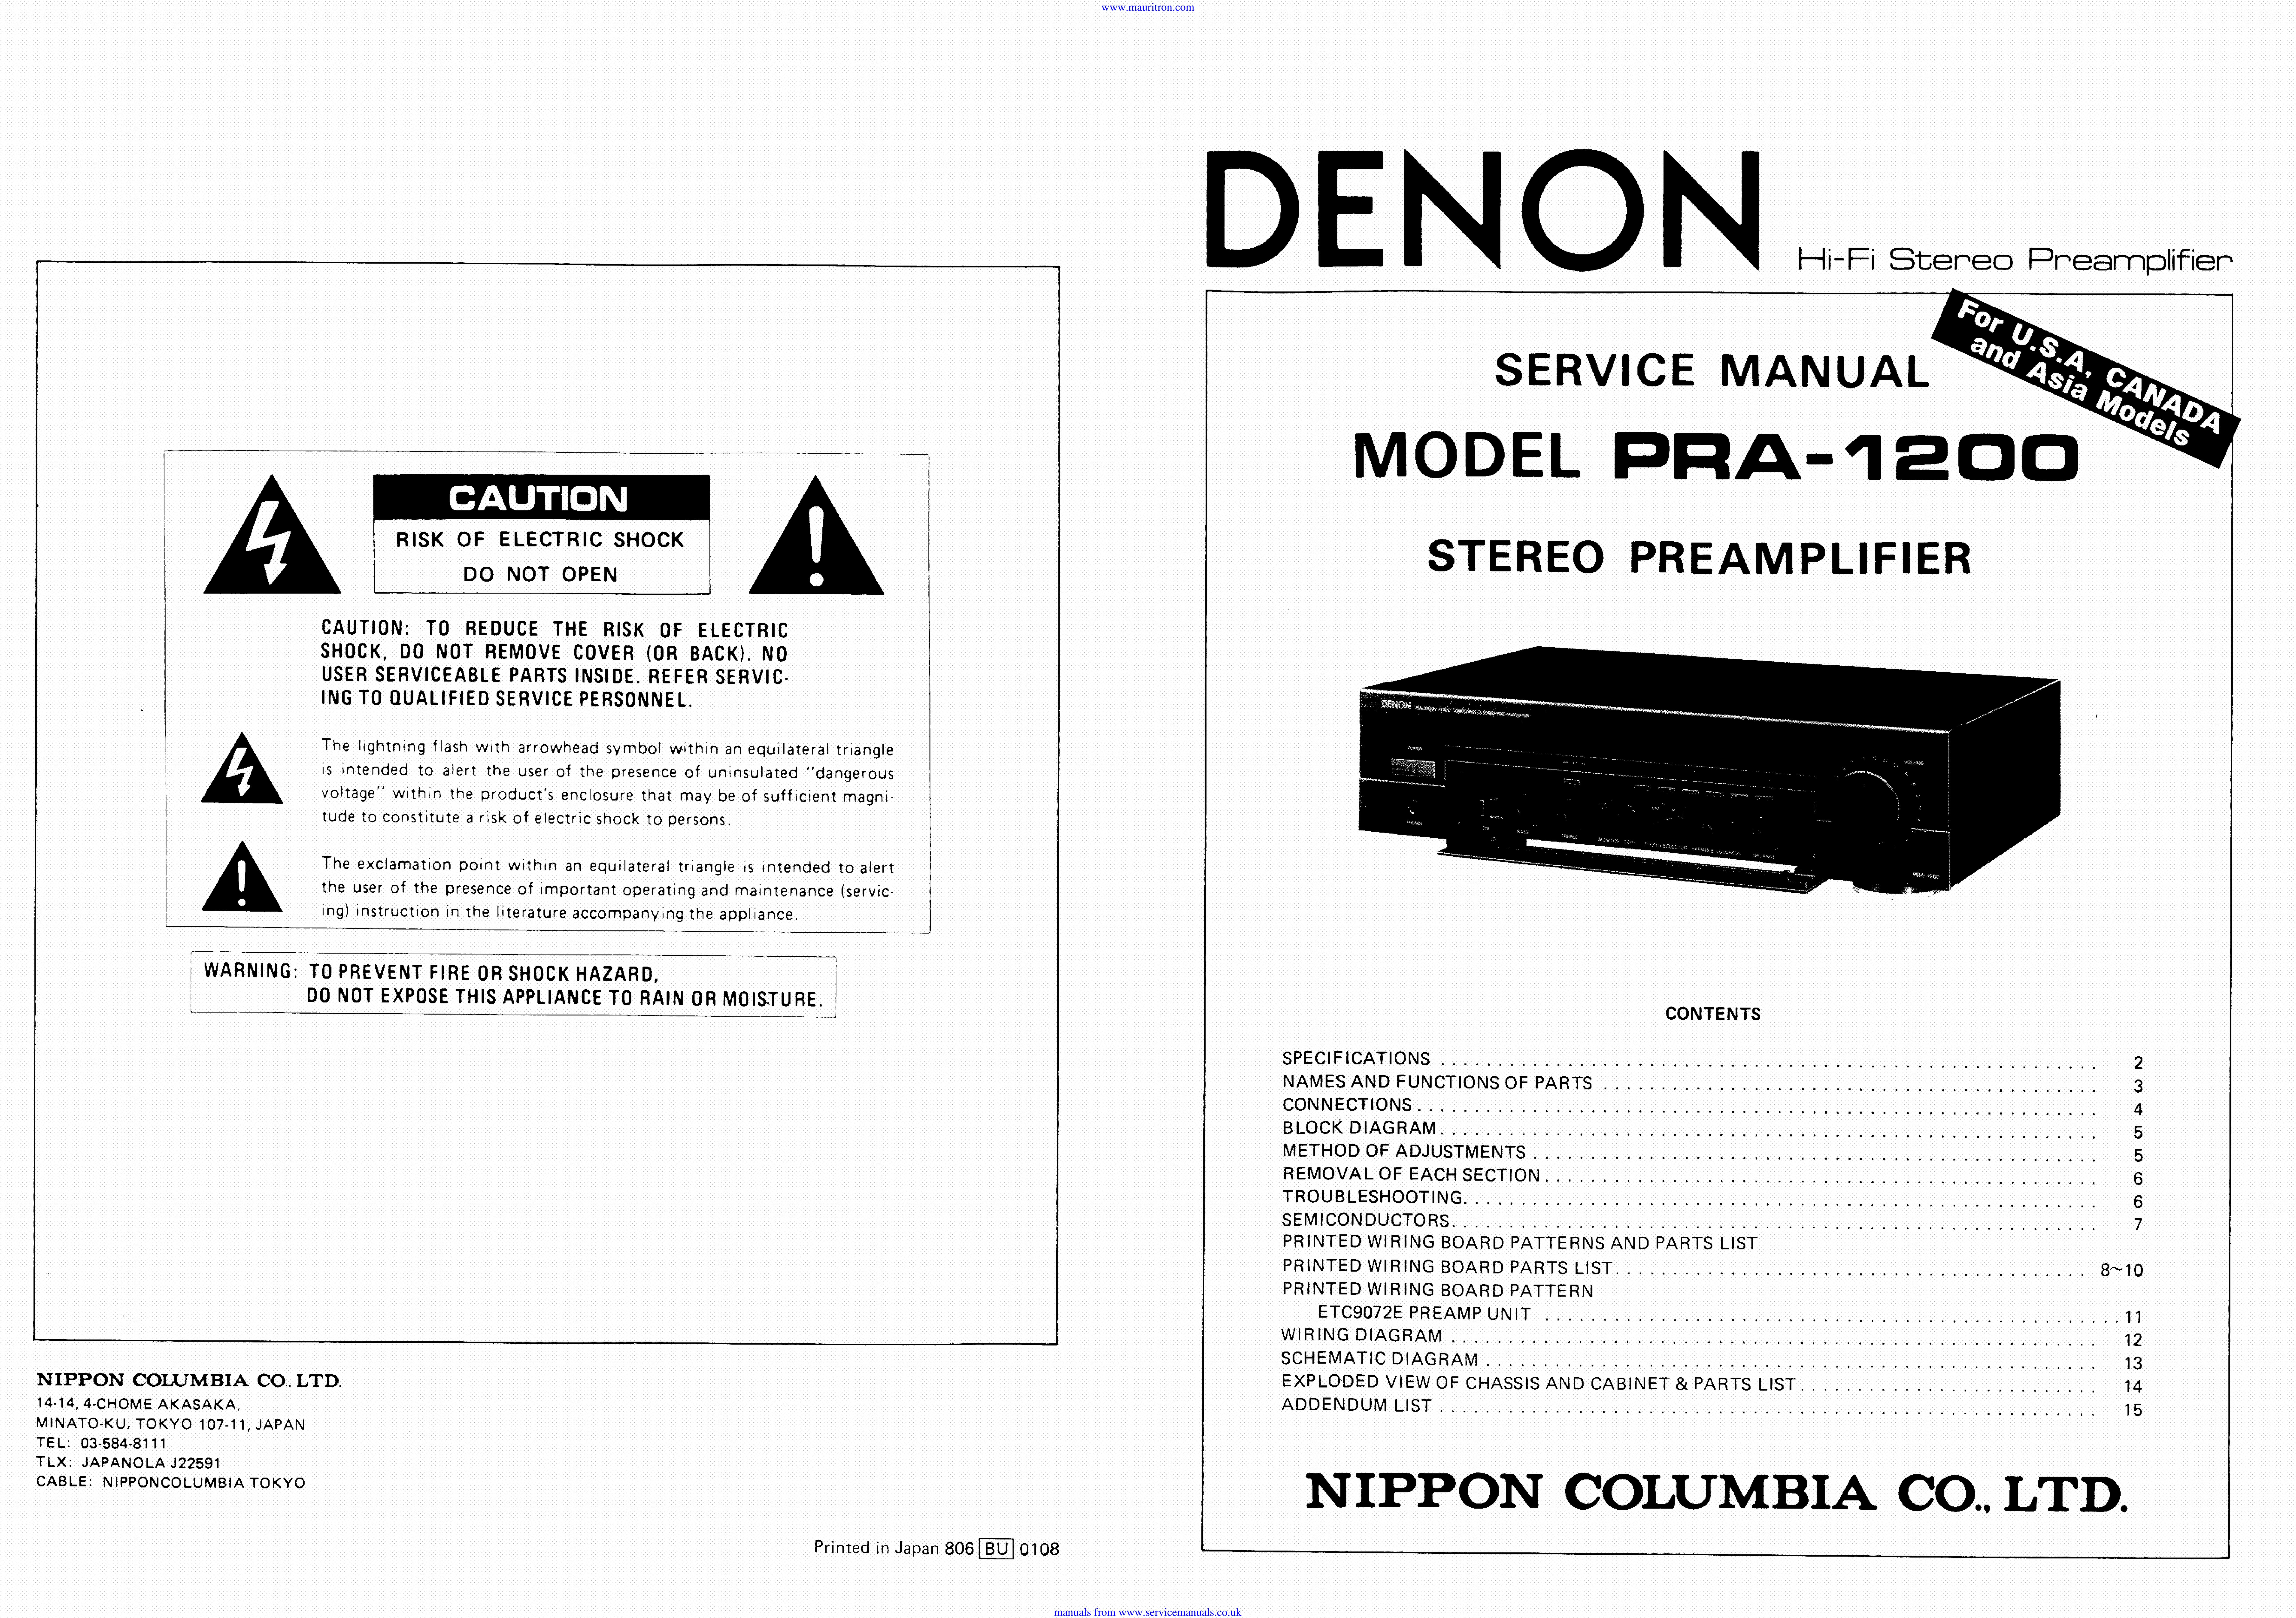 Denon PRA-1200 Service Manual